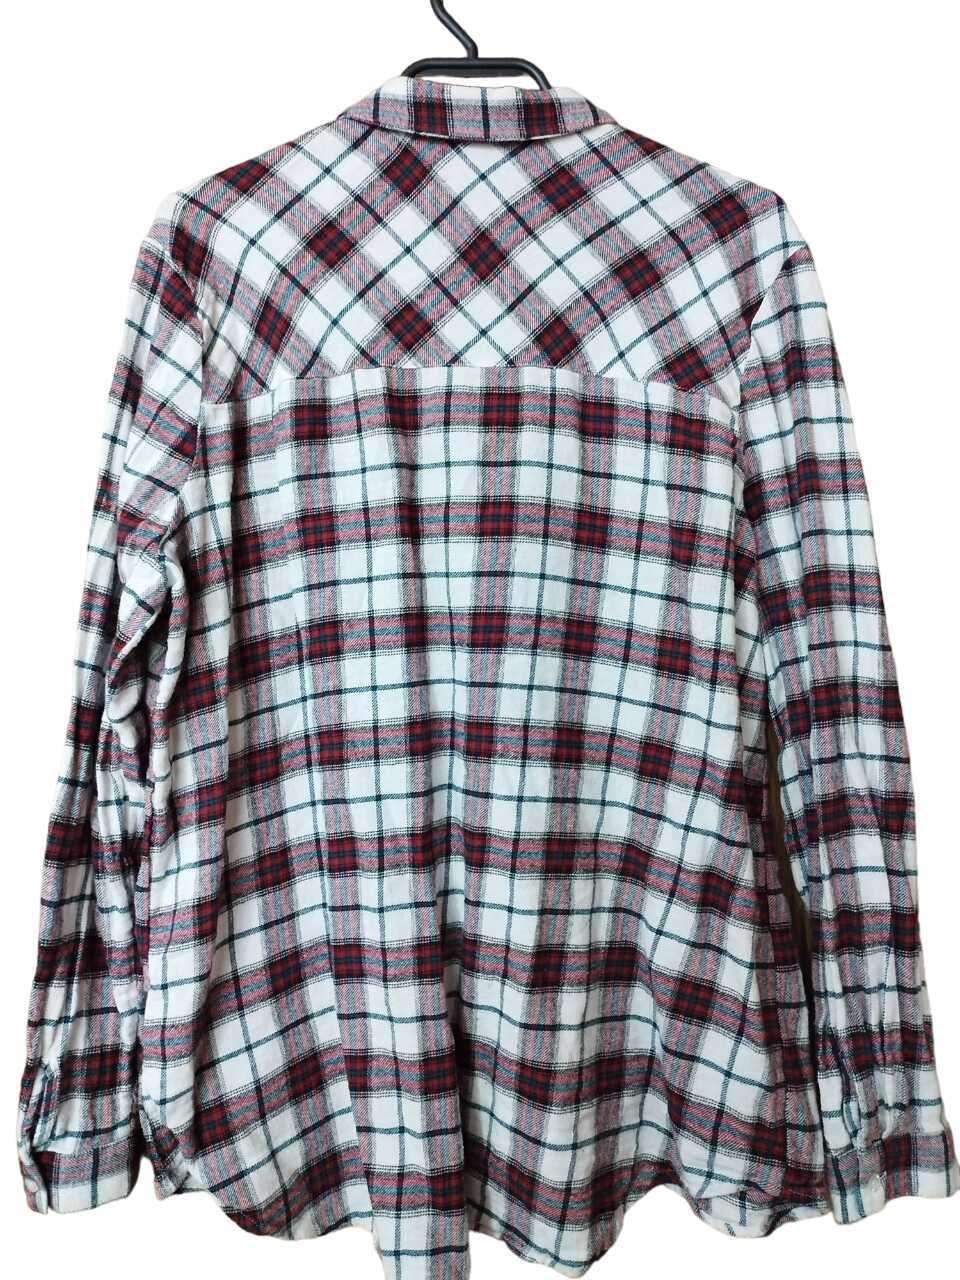 Дамска карирана риза LC Waikiki, 100% памук, Многоцветна, XL